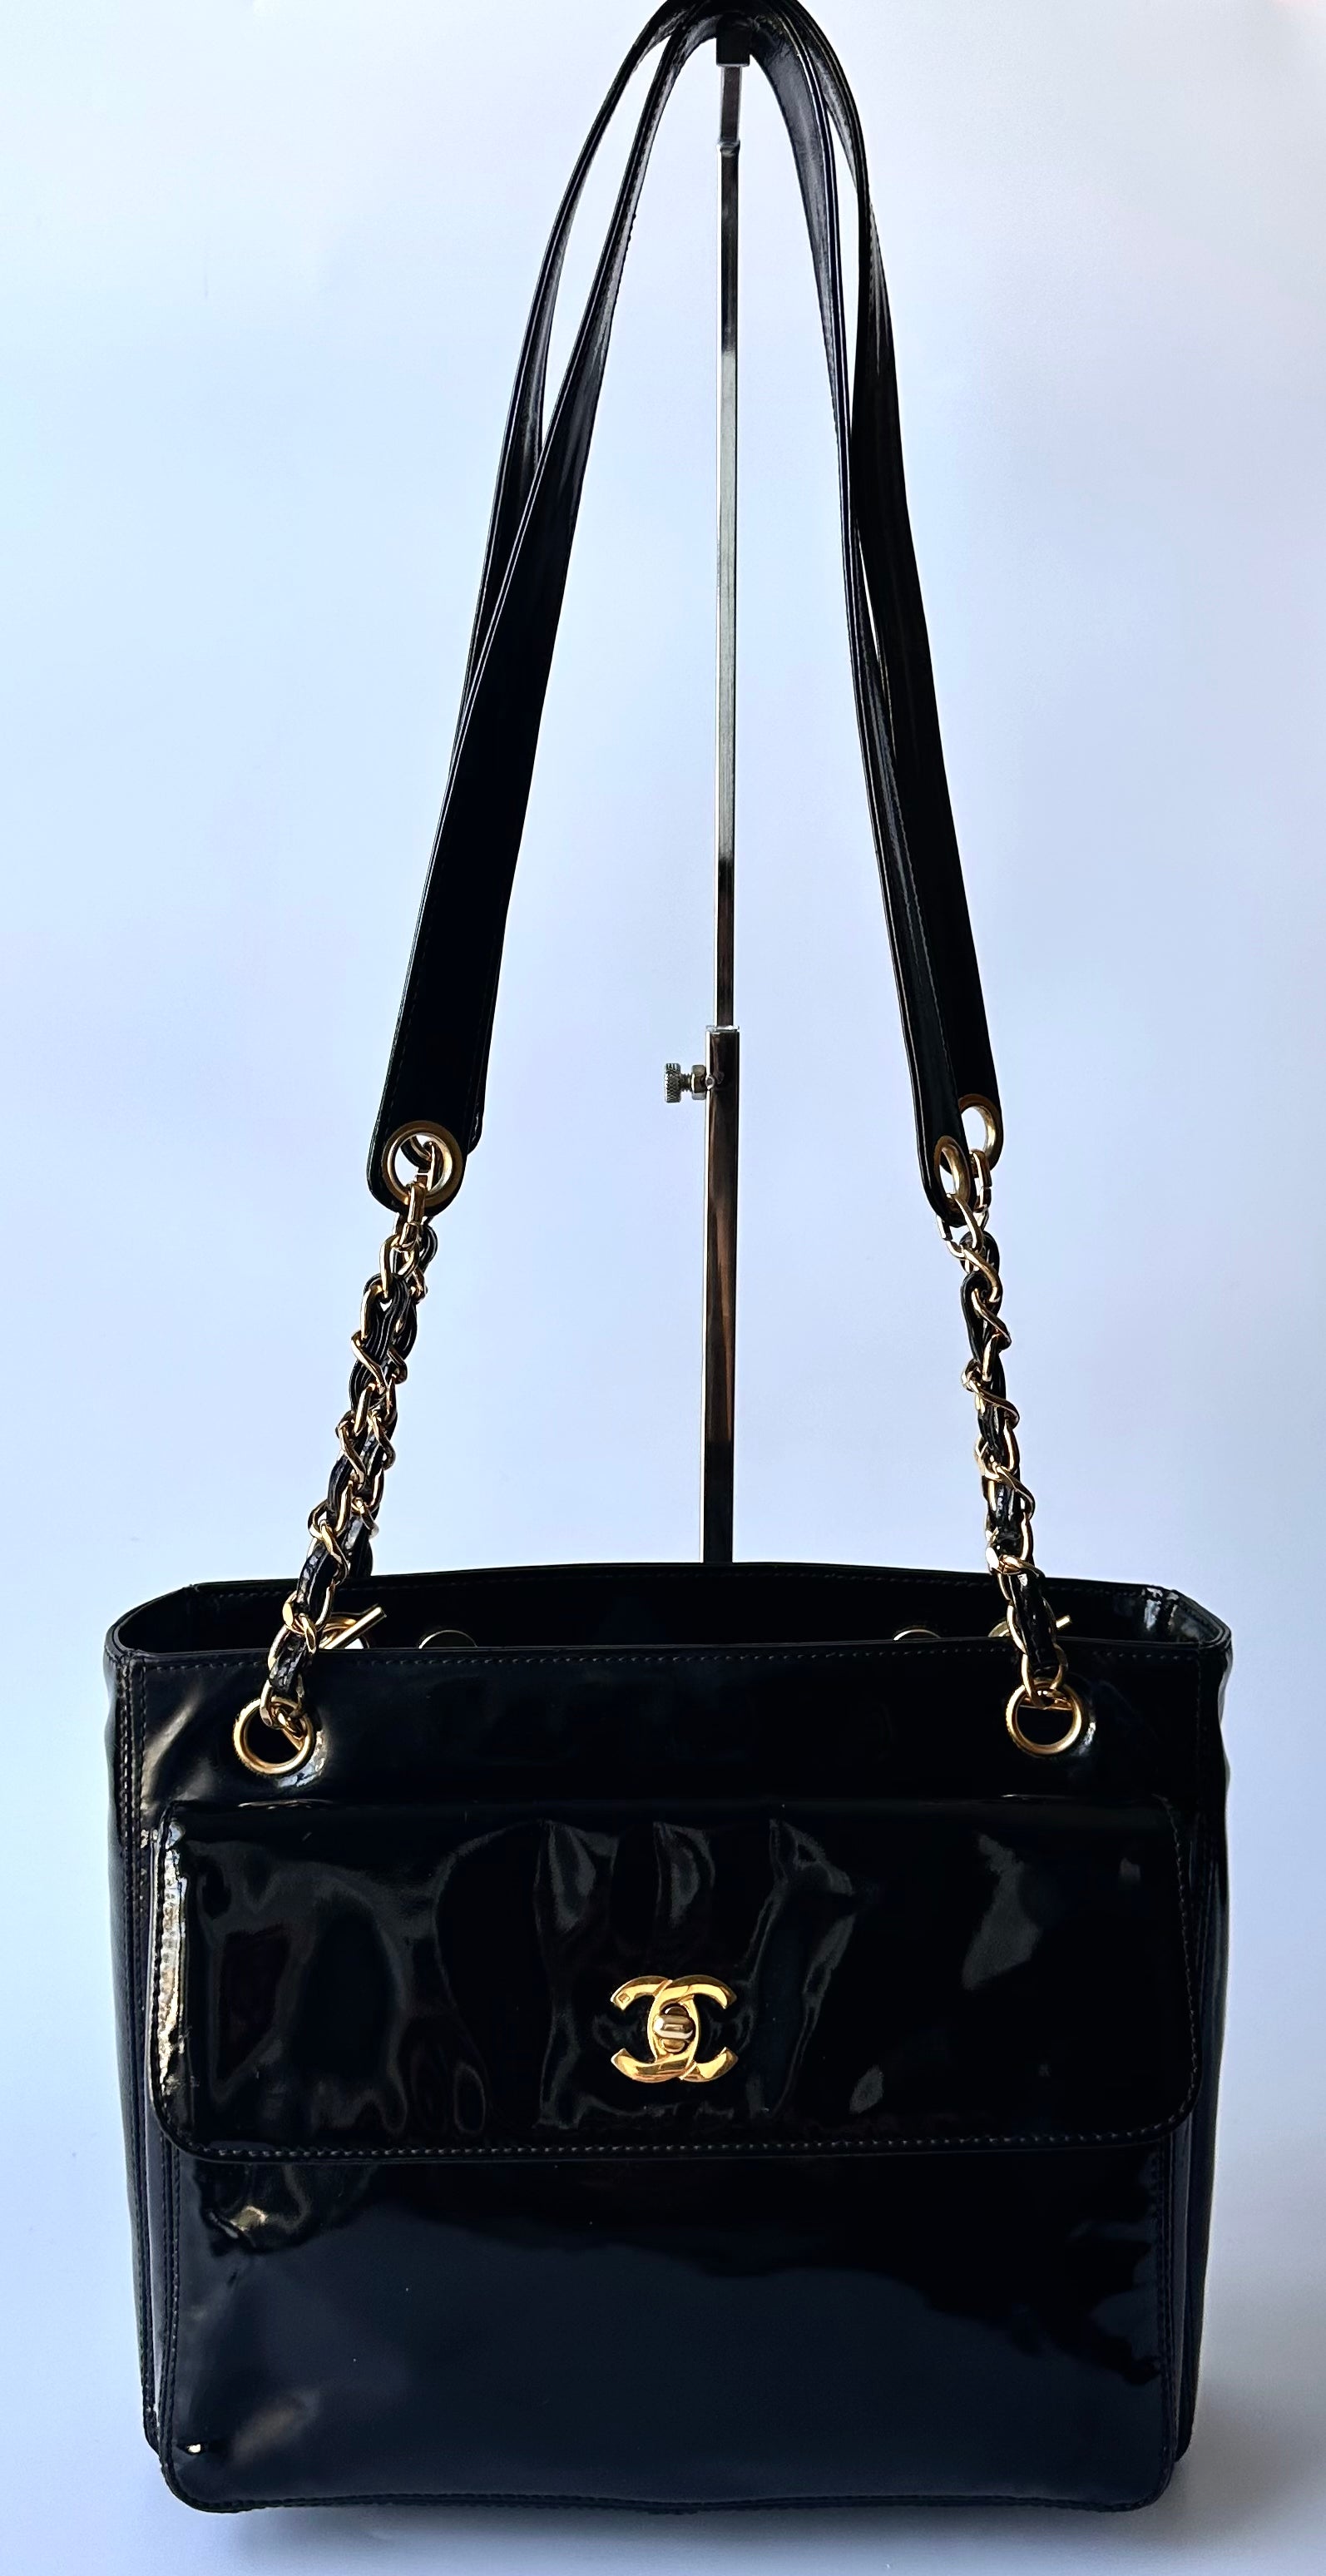 chanel handbags black and white